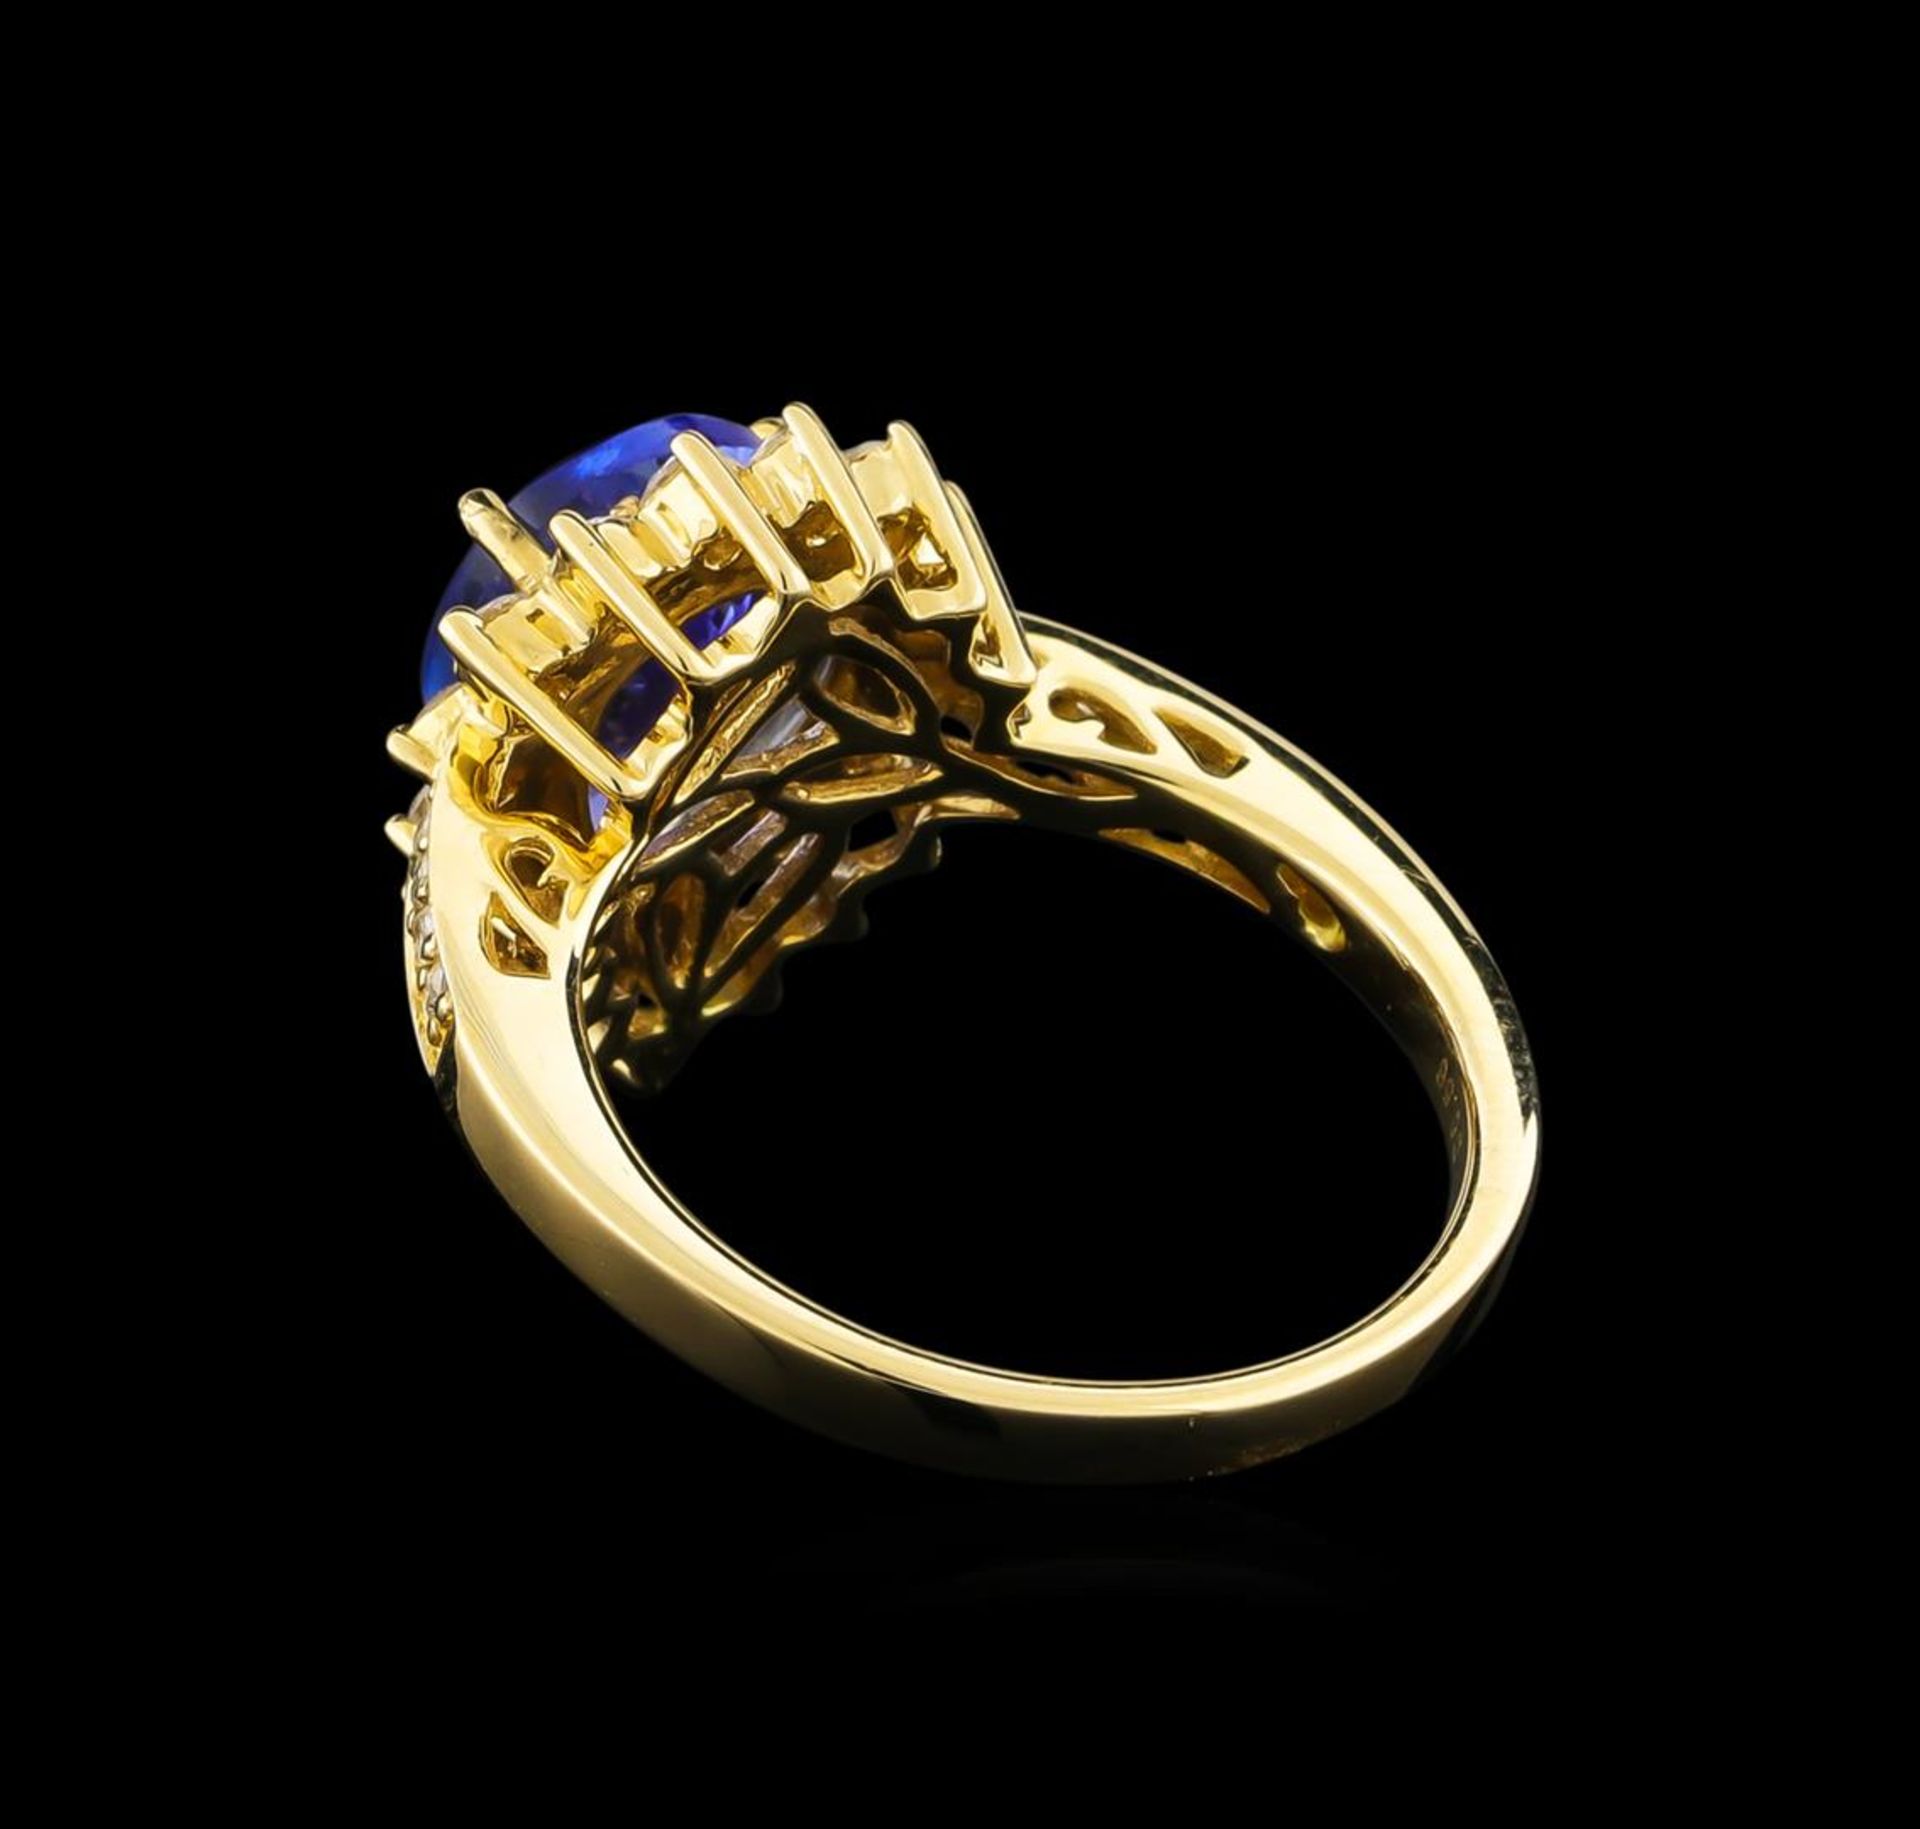 14KT Yellow Gold 2.86ct Tanzanite and Diamond Ring - Image 3 of 5